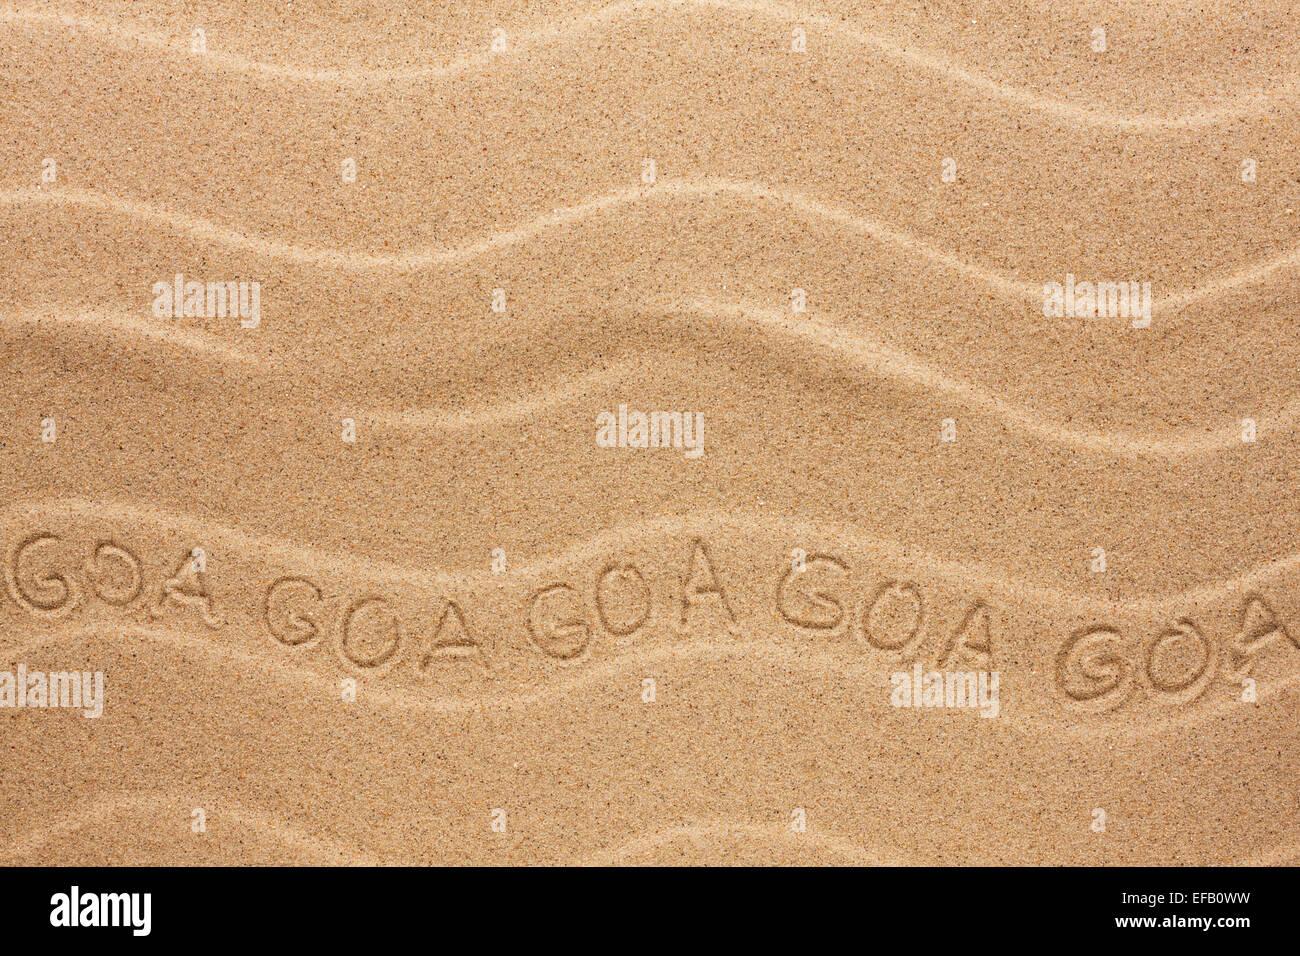 Goa inscription on the wavy sand, as background Stock Photo